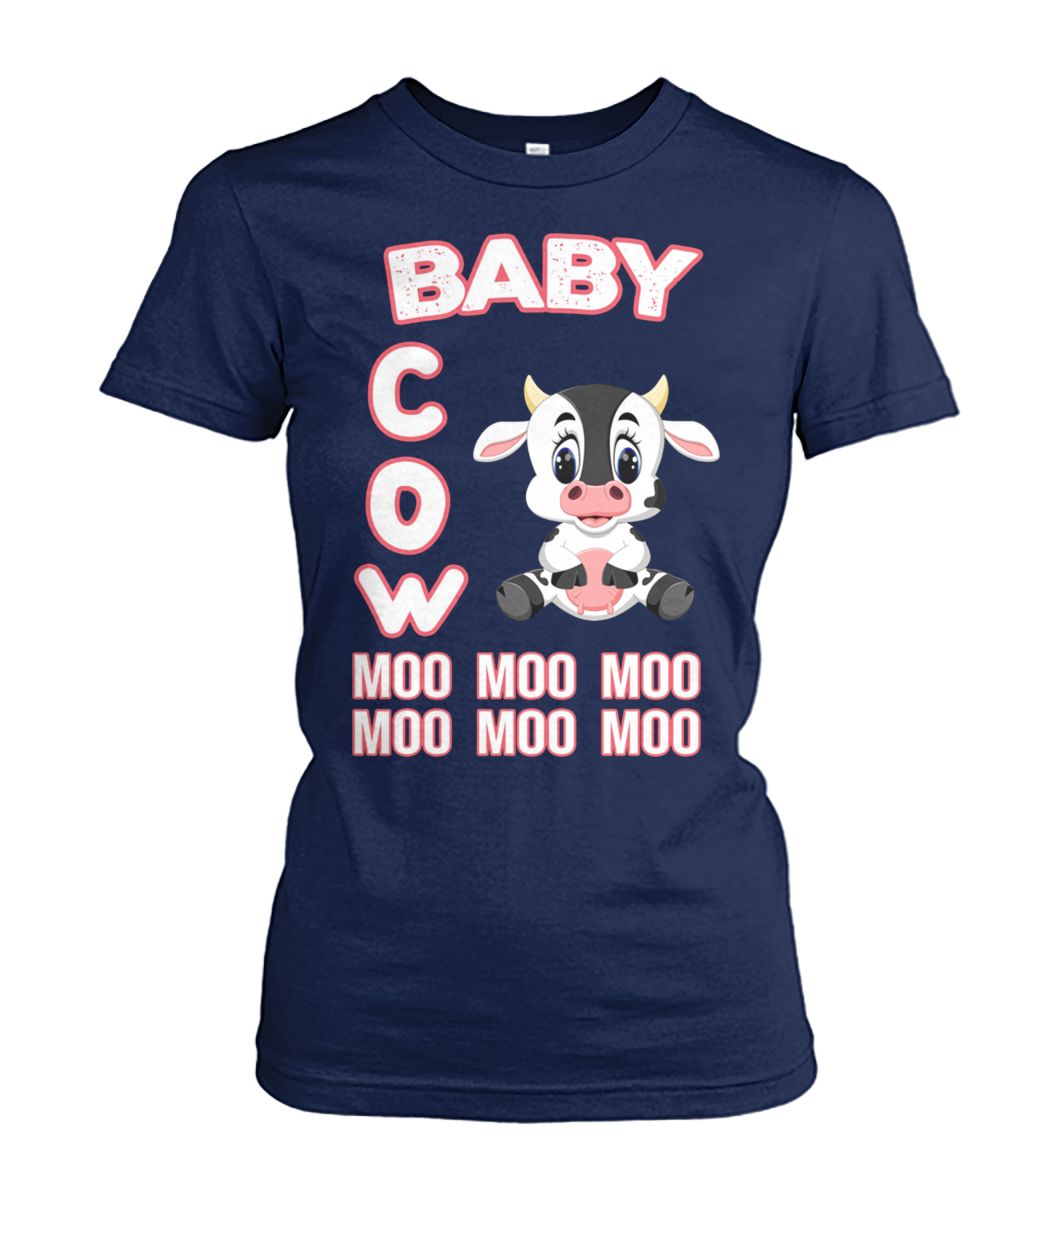 Baby cow moo moo moo women's crew tee